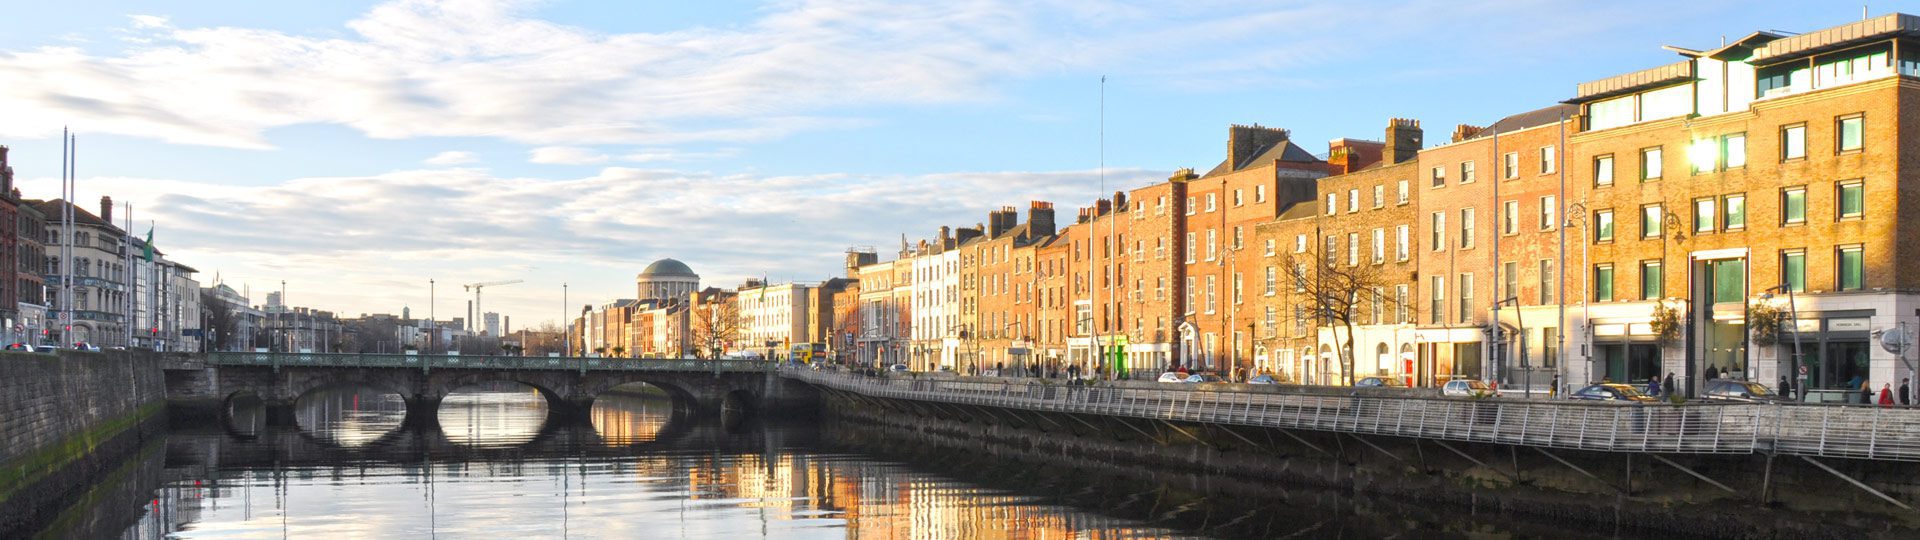 Dublin City Liffey View